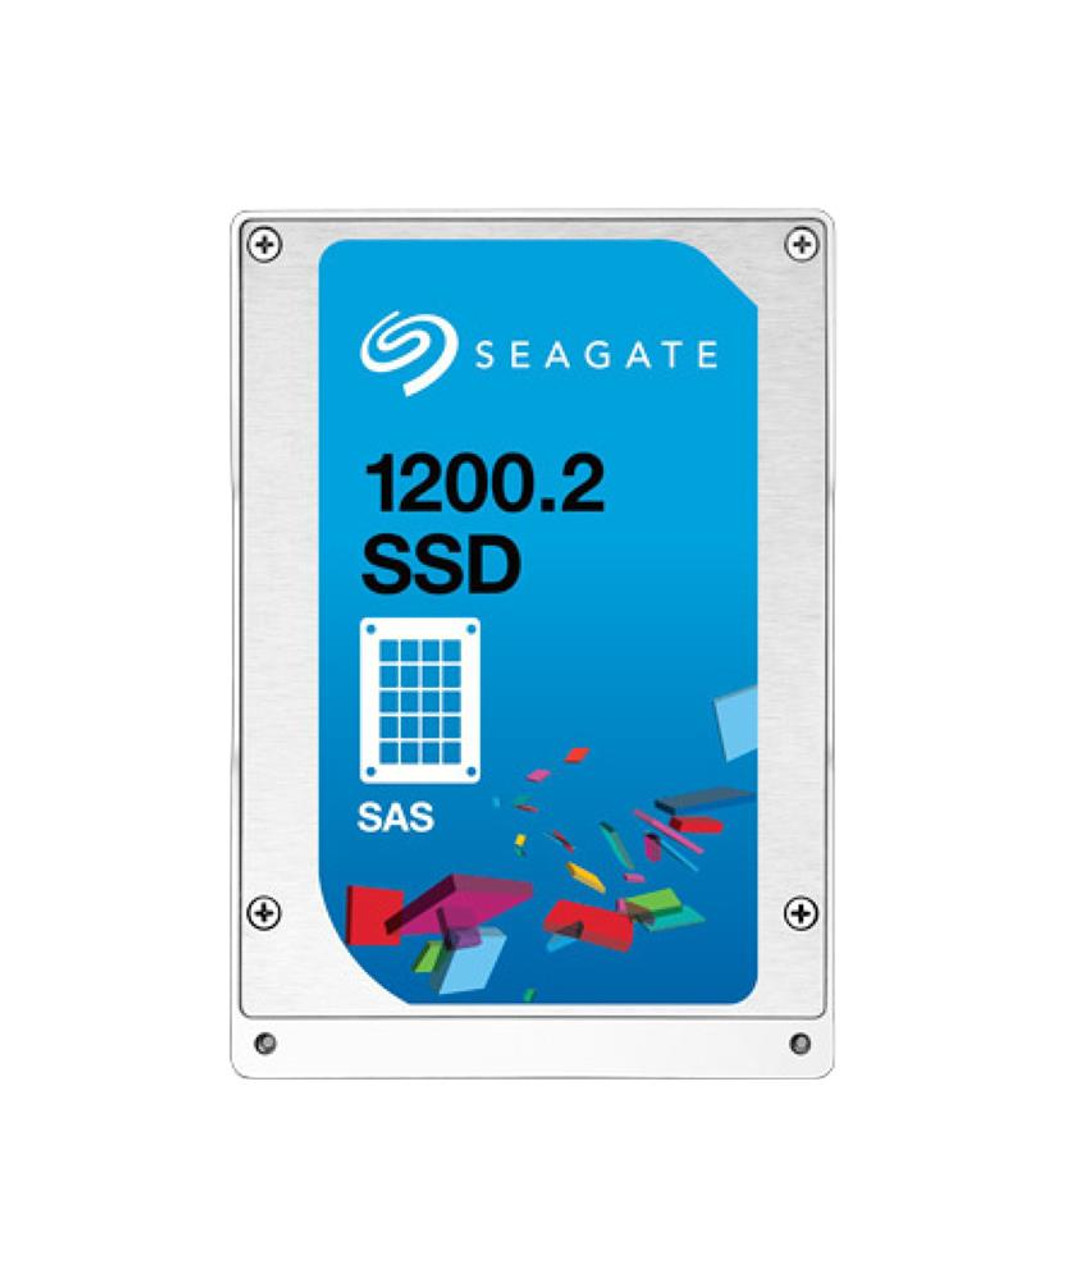 ST200FM0073-10PK Seagate 1200.2 Series 200GB eMLC SAS 12Gbps Dual Port Mainstream Endurance (SED) 2.5-inch Internal Solid State Drive (SSD) (10-Pack)